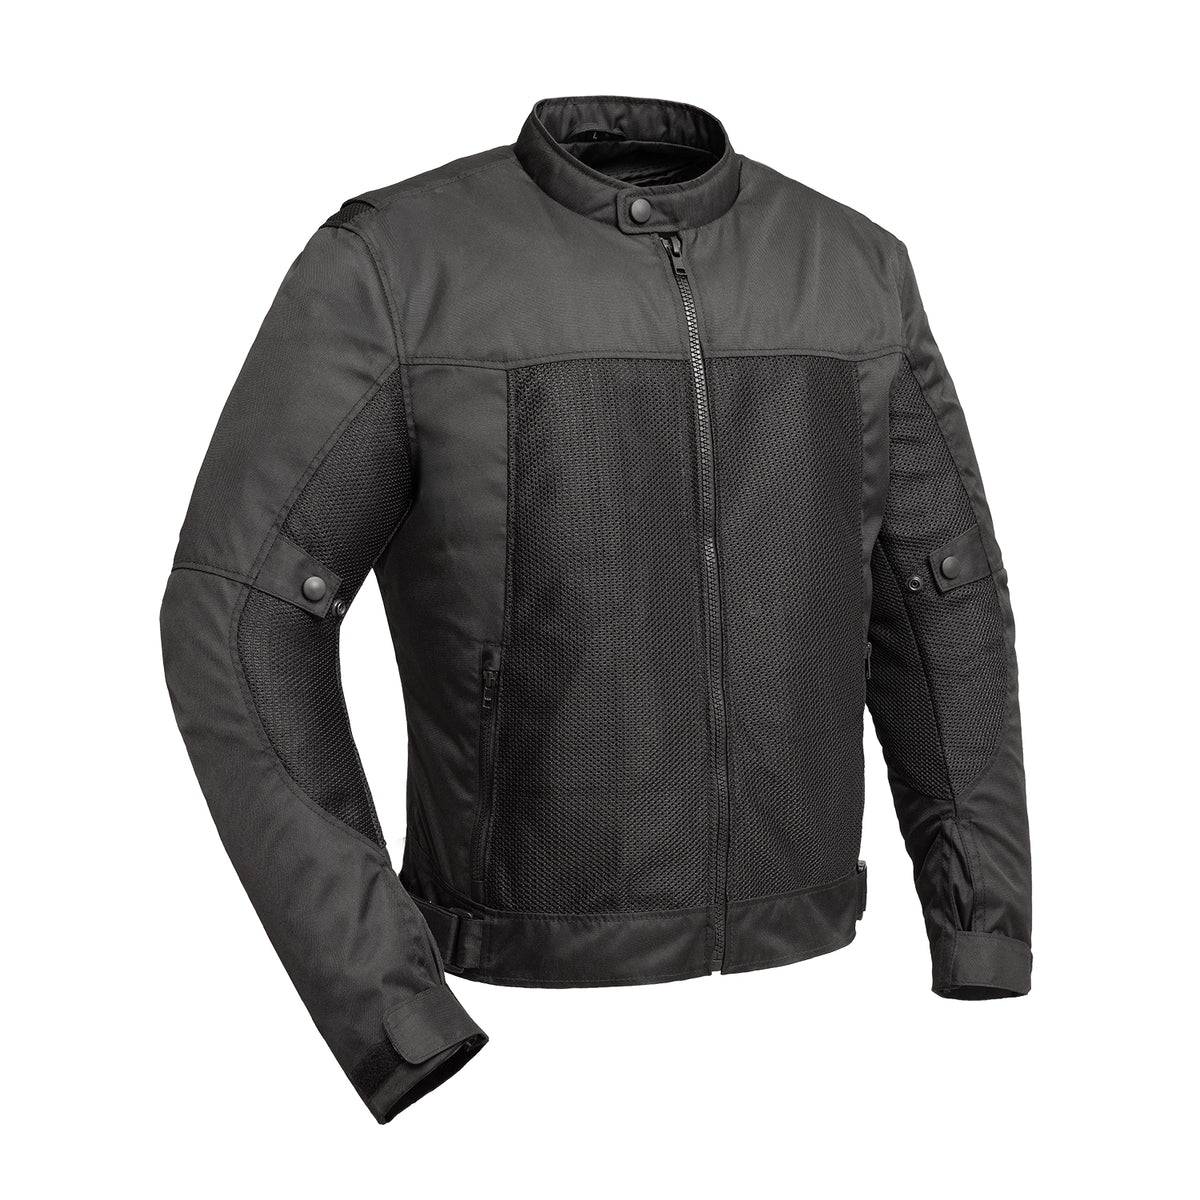 Storm Men's Cordura Textile Jacket Men's Jacket First Manufacturing Company Black S 